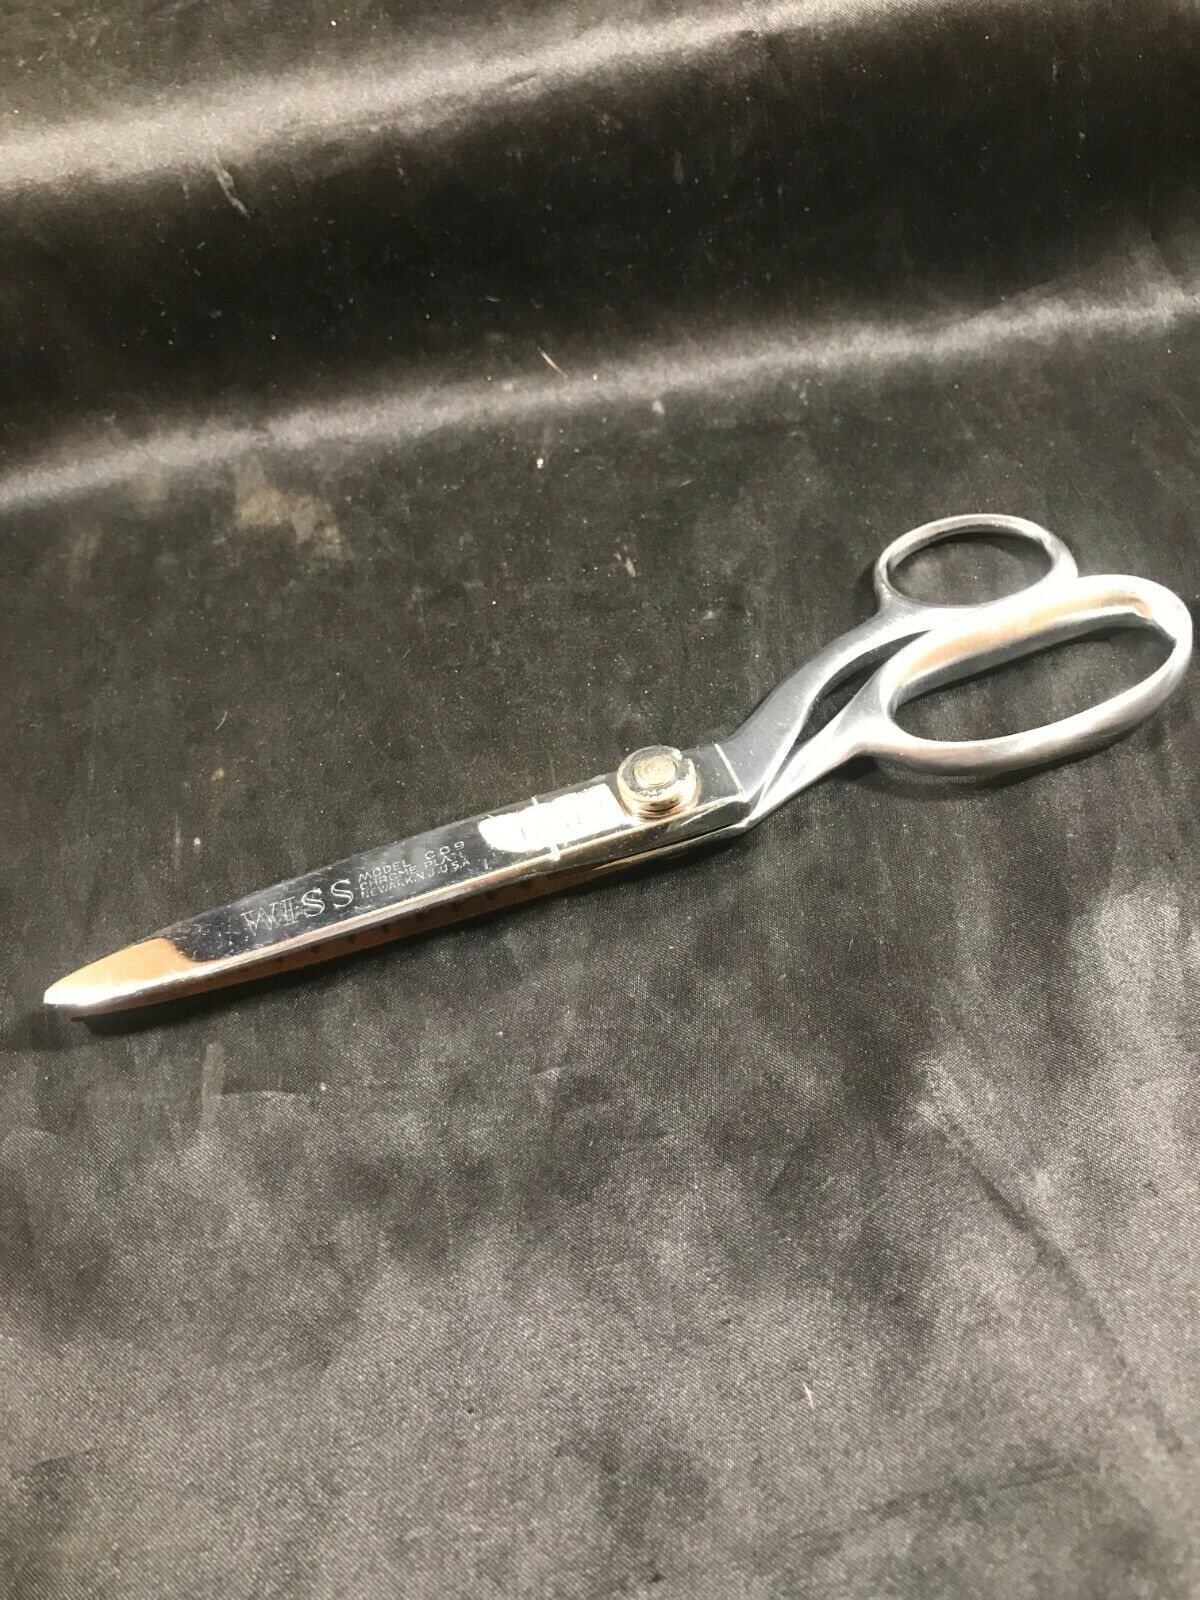 Vintage WISS Pinking Shears Scissors CC9 Chrome Heavy Duty